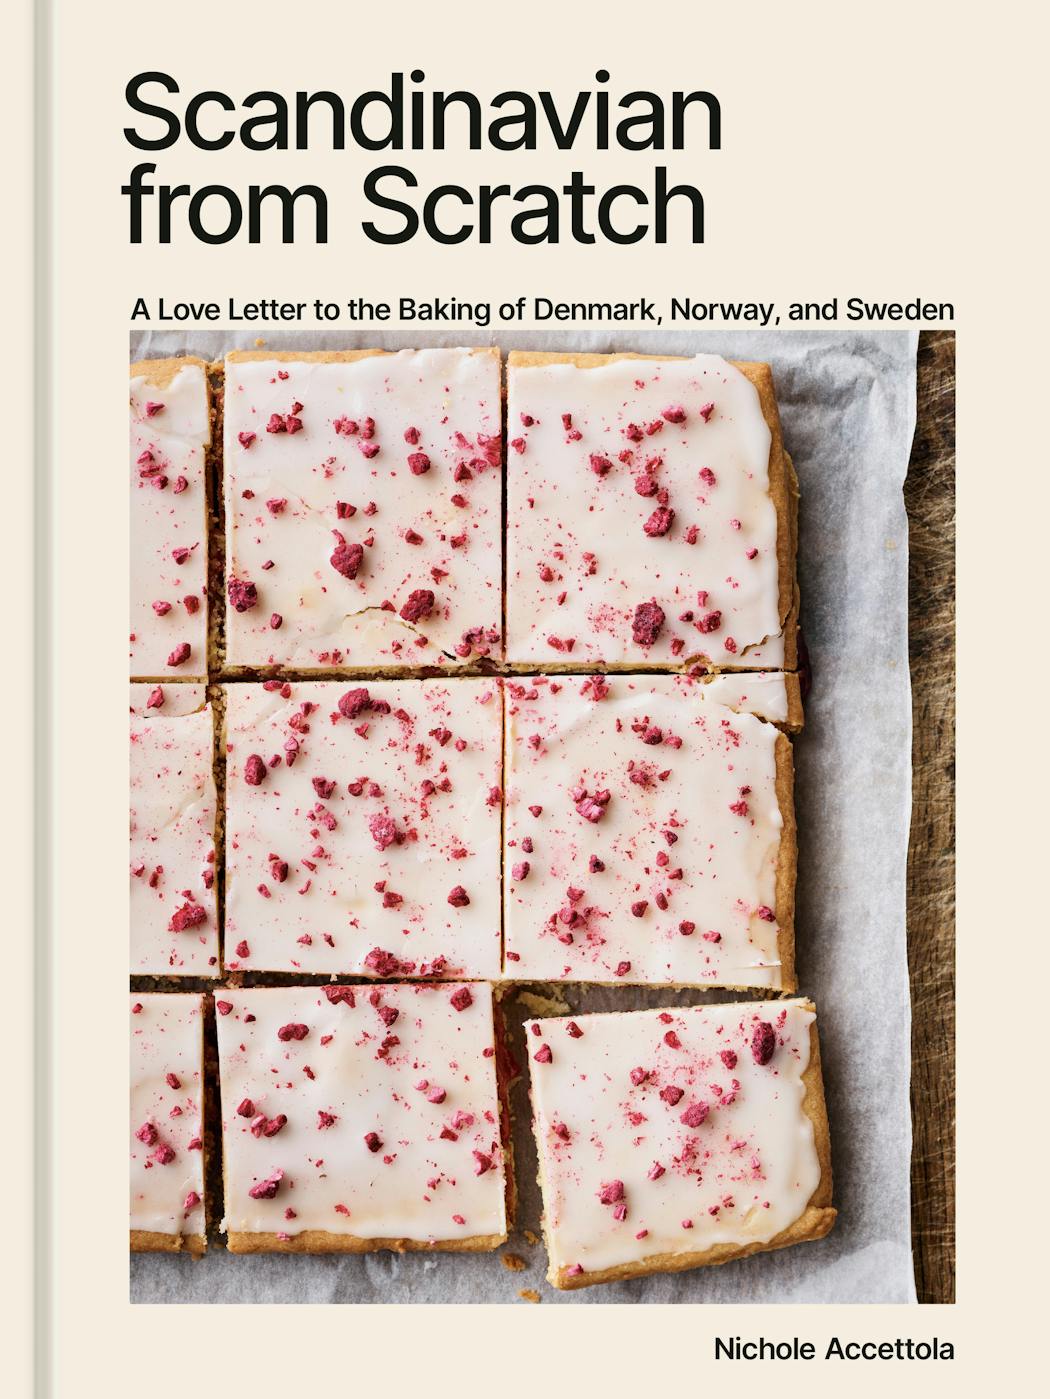 “Scandinavian From Scratch” is chef Nichole Accettola's first cookbook (Ten Speed Press).